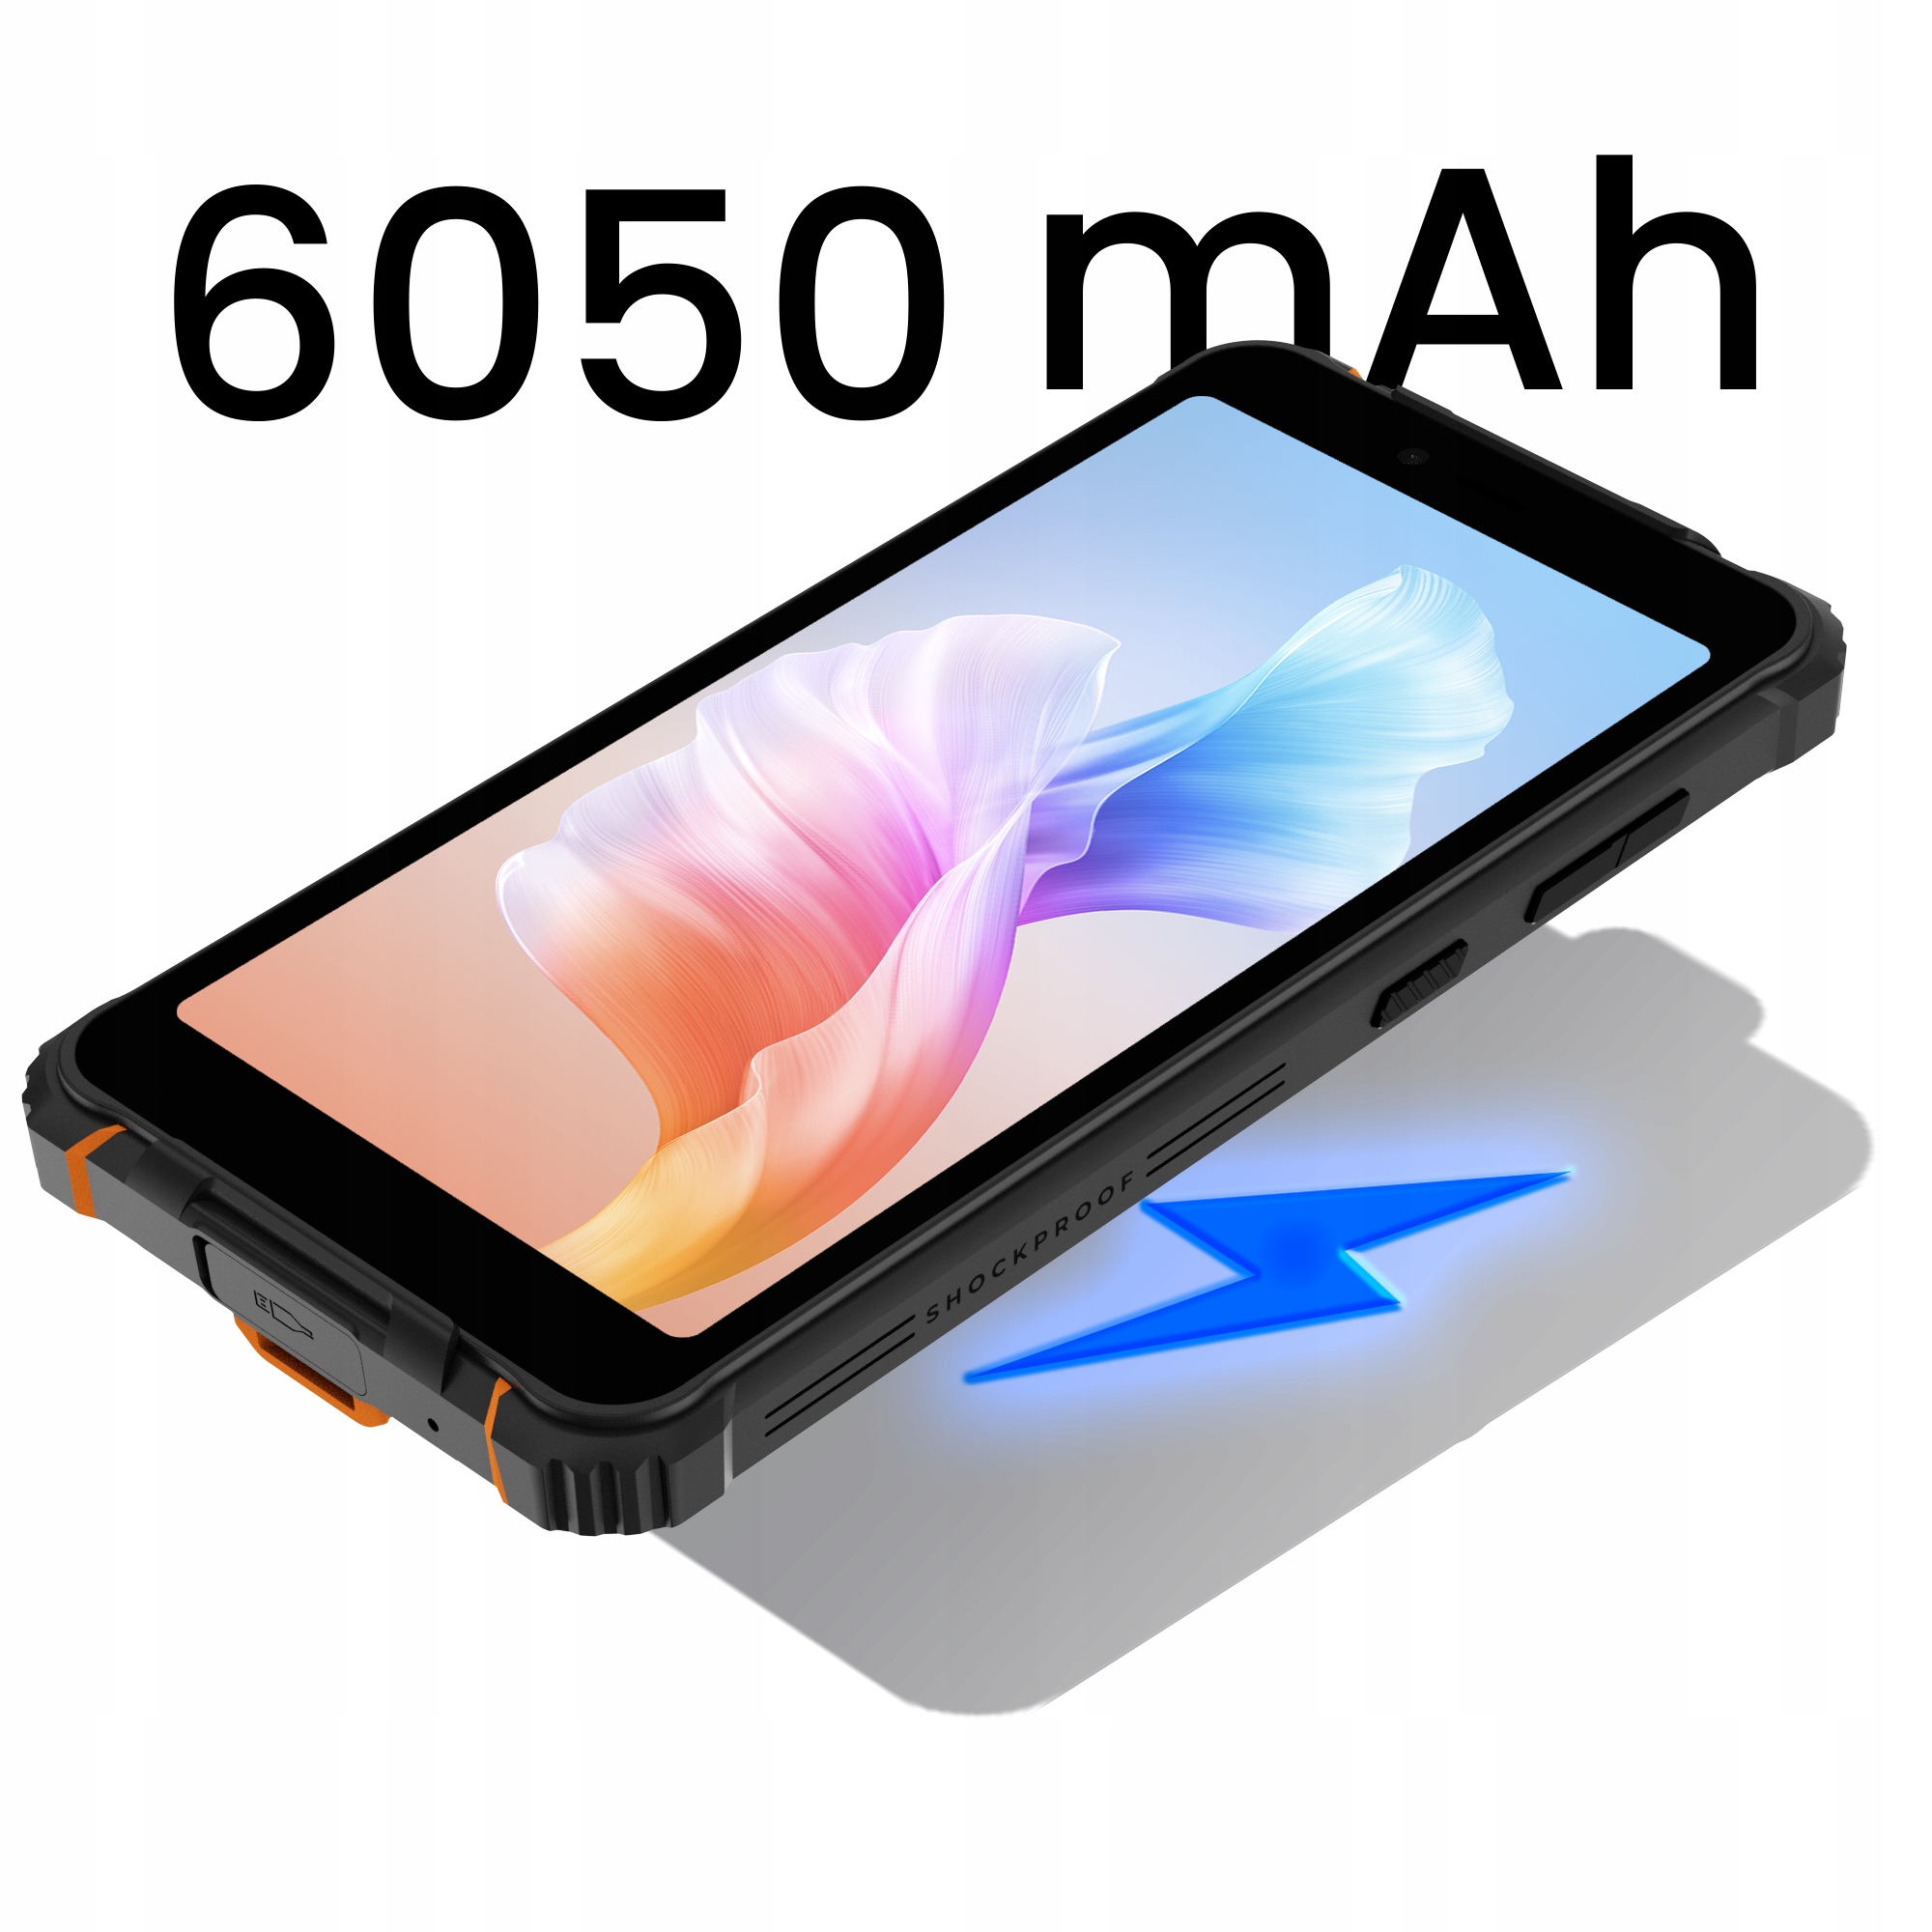 Smartphone HOTWAV T5 Max 4/64GB 6050mAh 13MP NFC Paměť RAM 4 GB